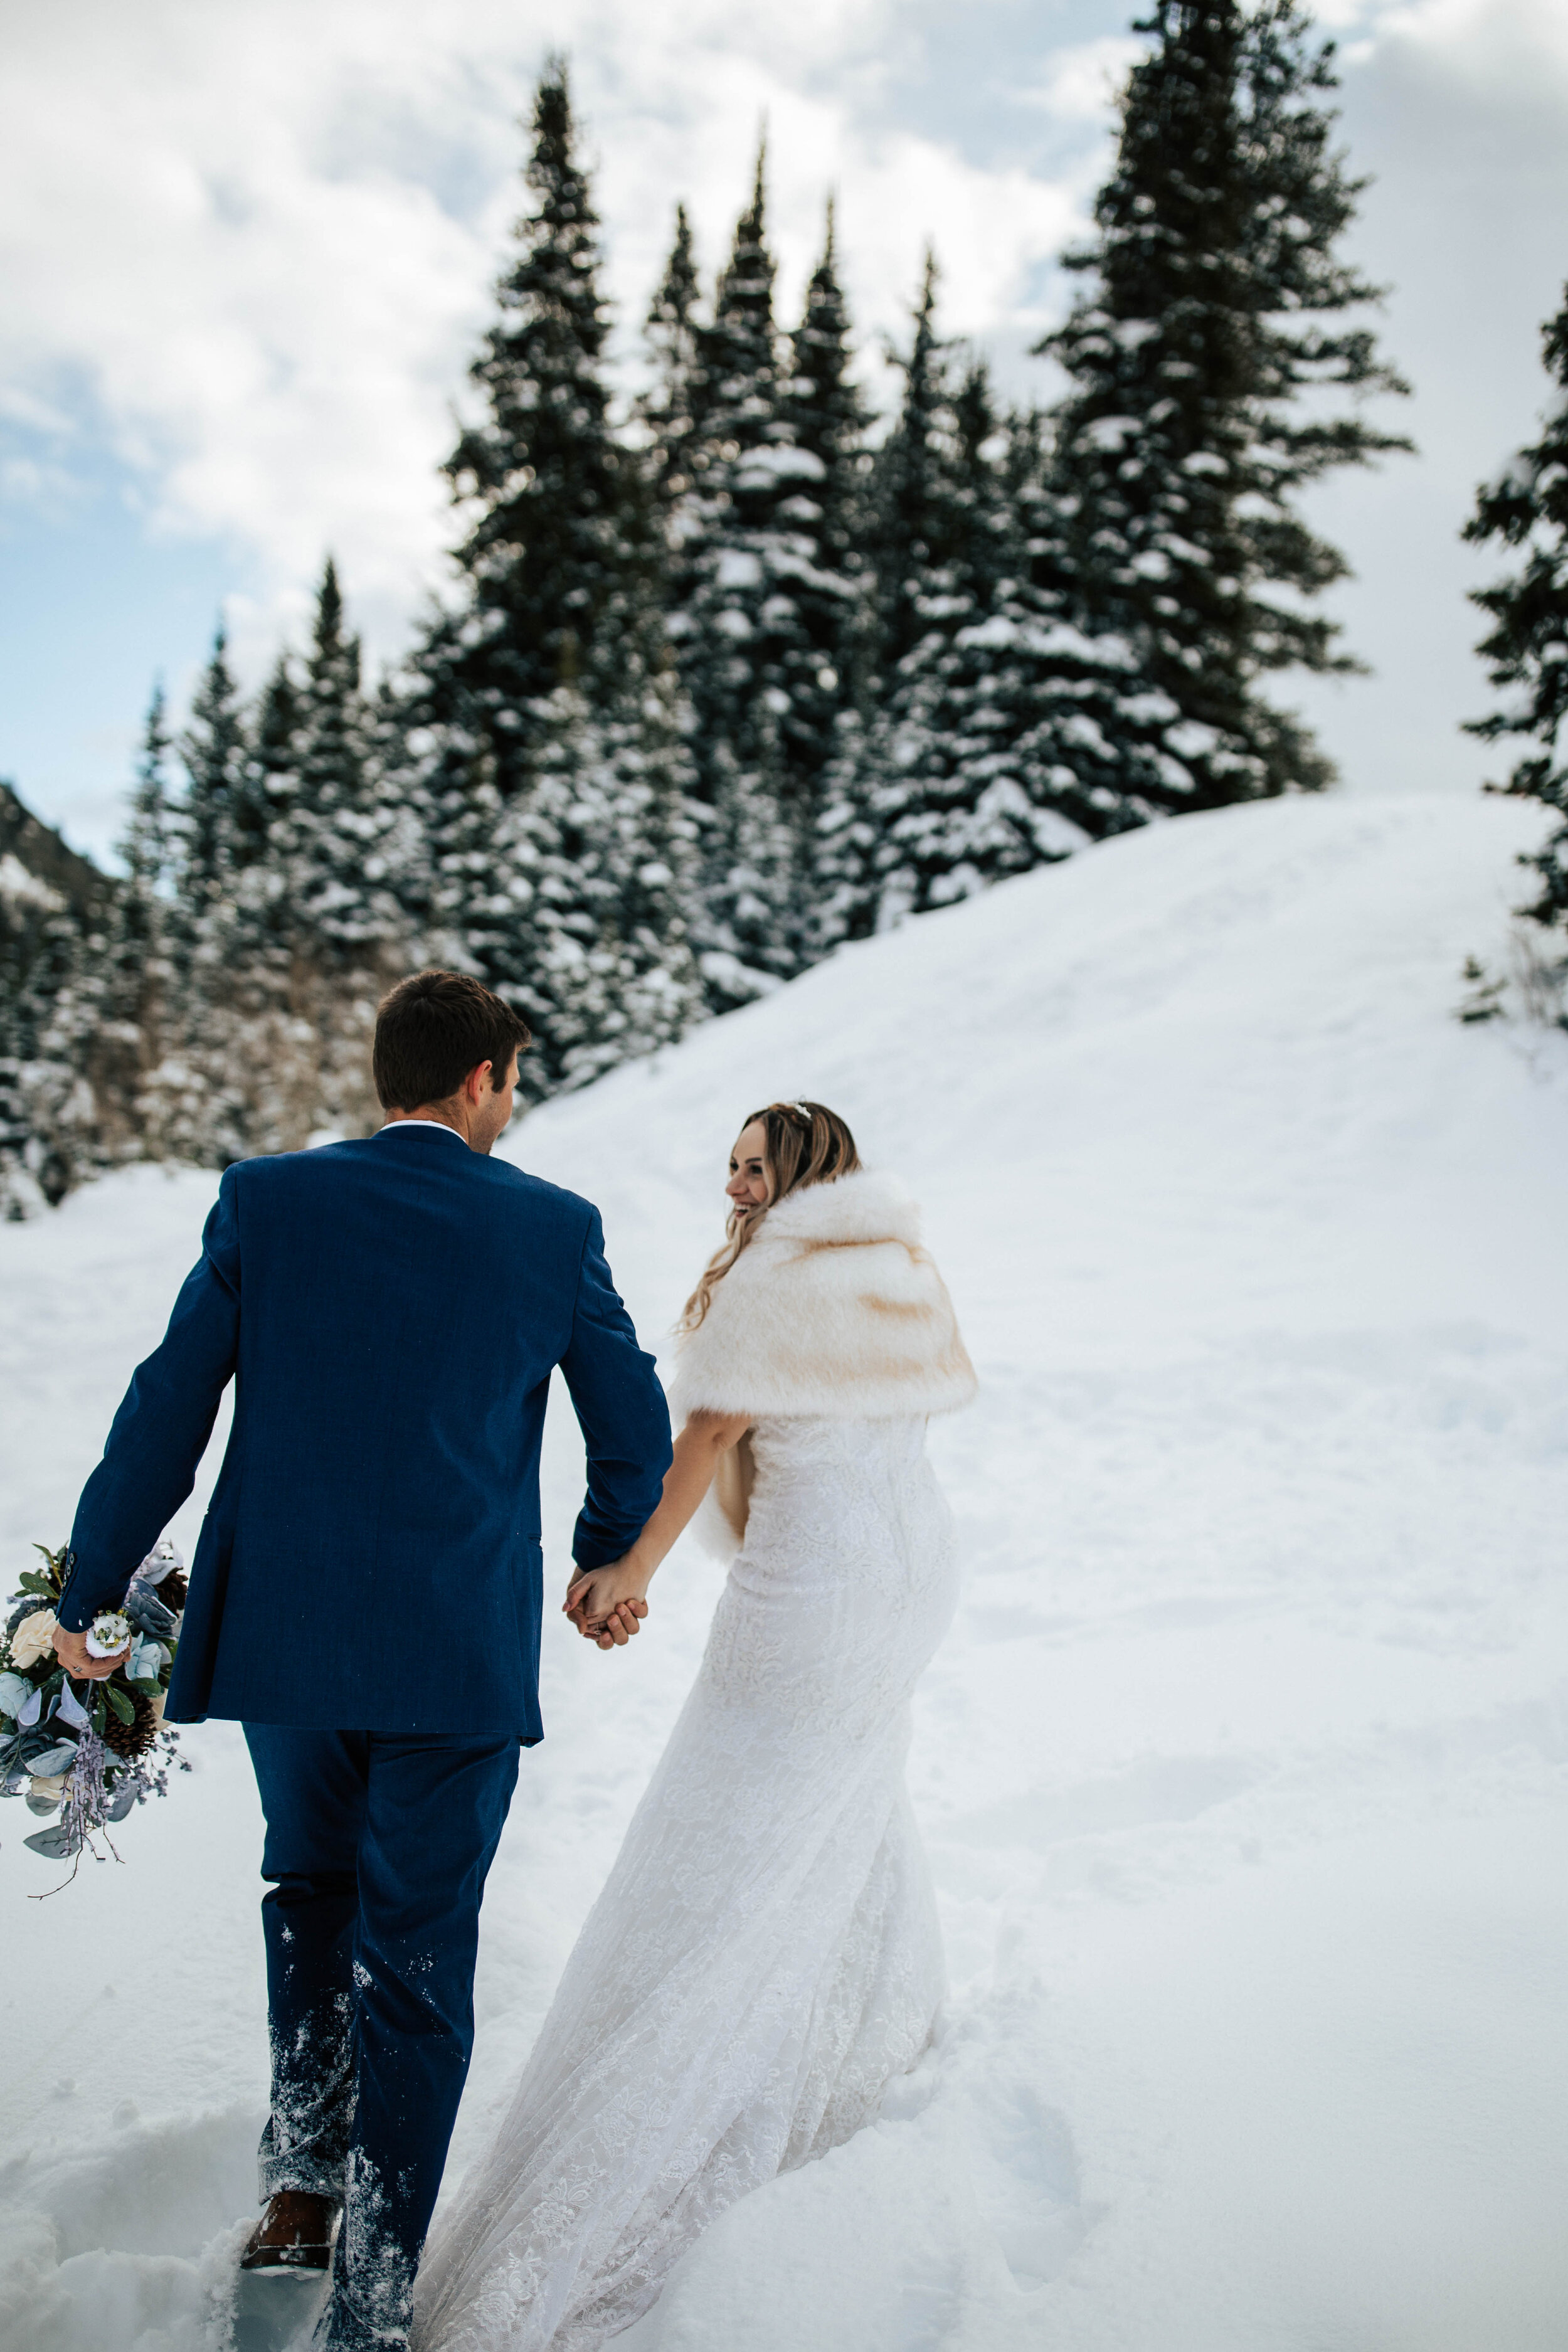 Wedding couple winter wedding bridals snow #winterwedding #weddingphotographer #bridals #bridalshoot #coupleshoot photoshoot running away